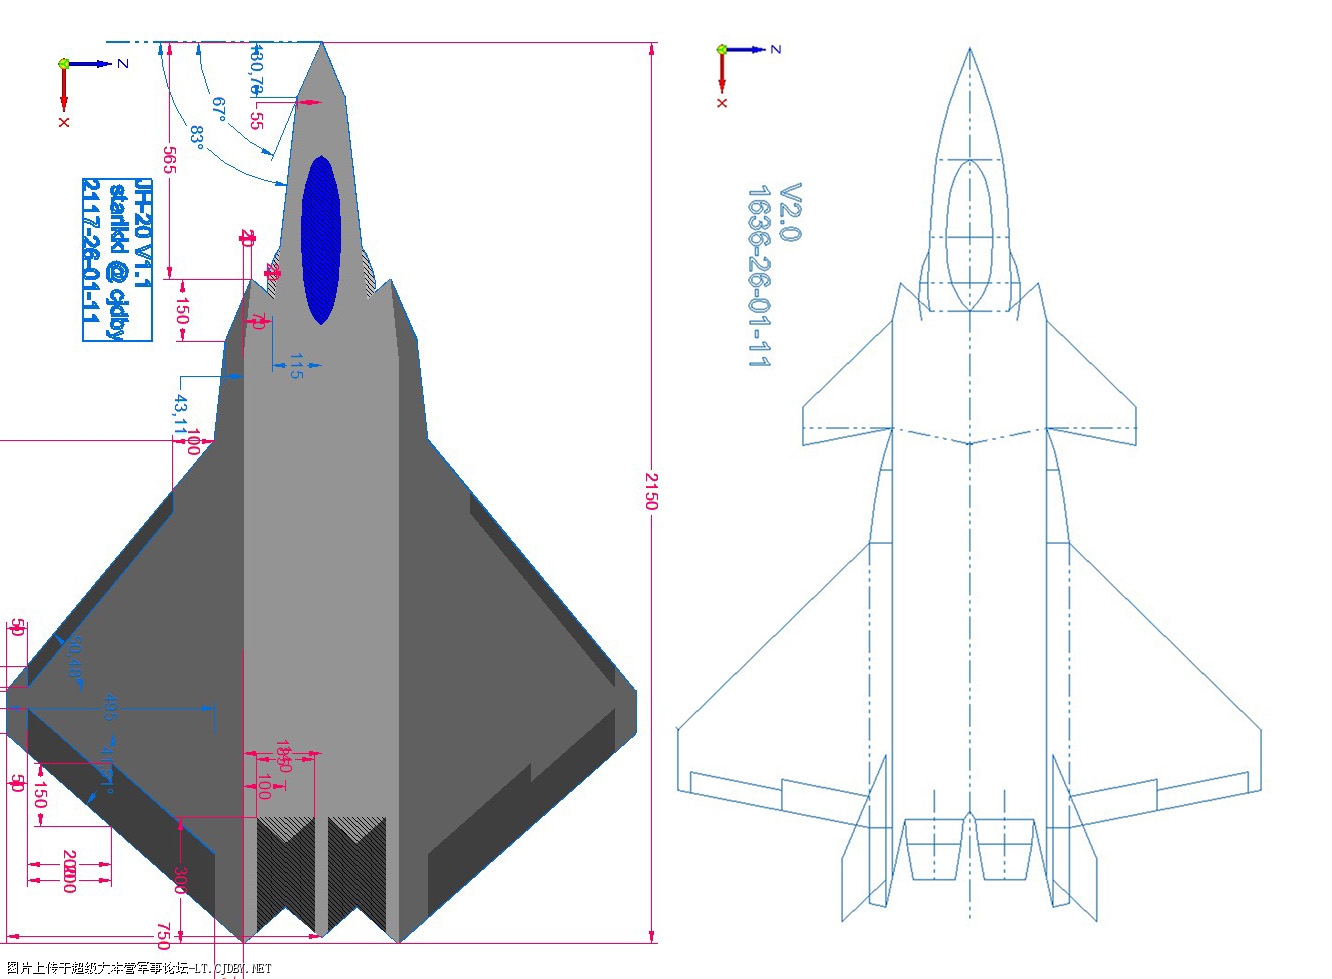 jh-20-j-20-comparison-mil-avia.jpg